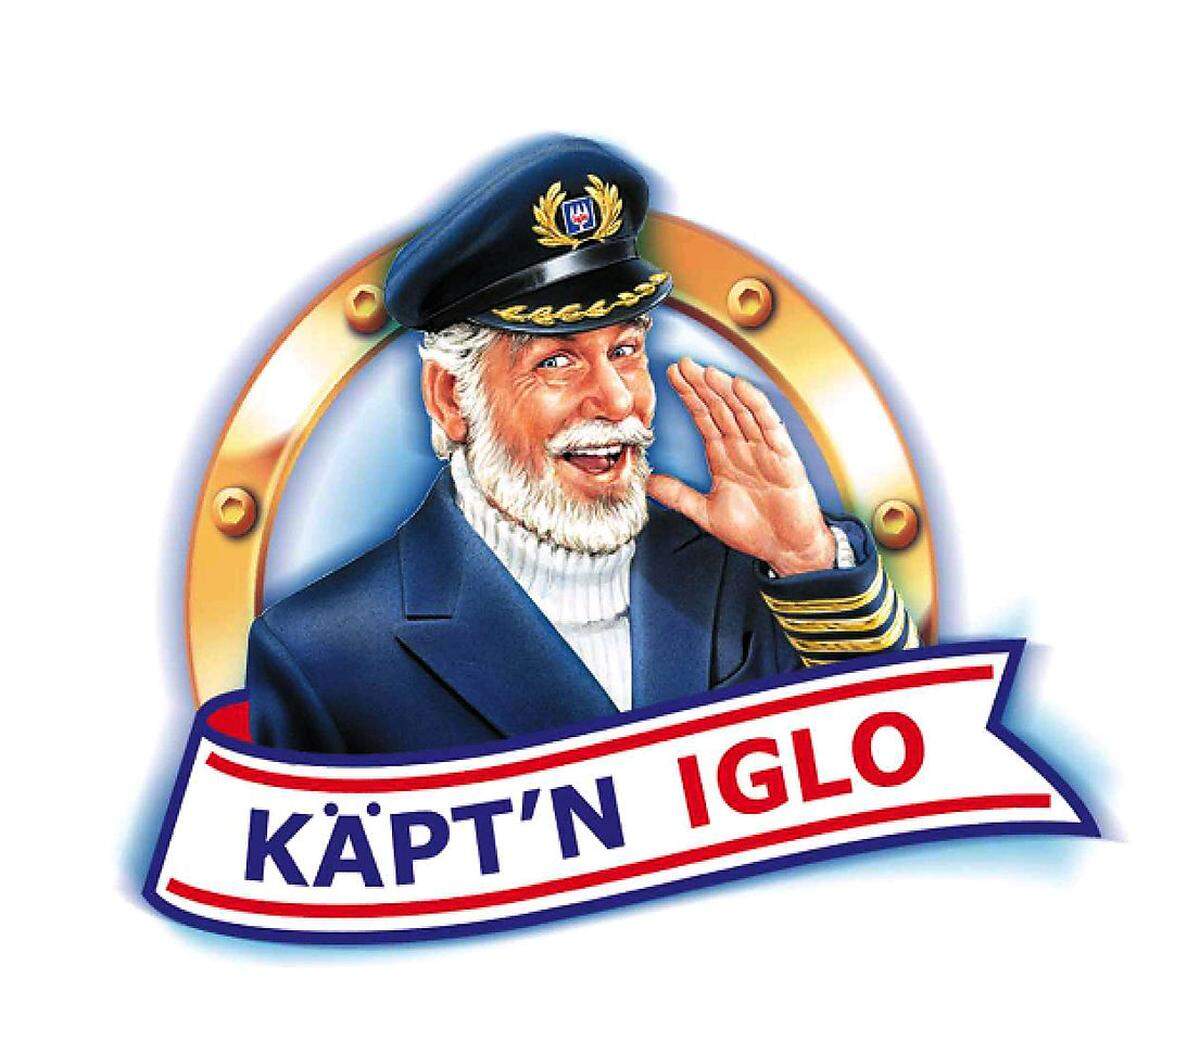 Kapitn-Logo-Keyvisual--Key-visual-Kptn-Iglo_1516281864088277_v0_h.jpg